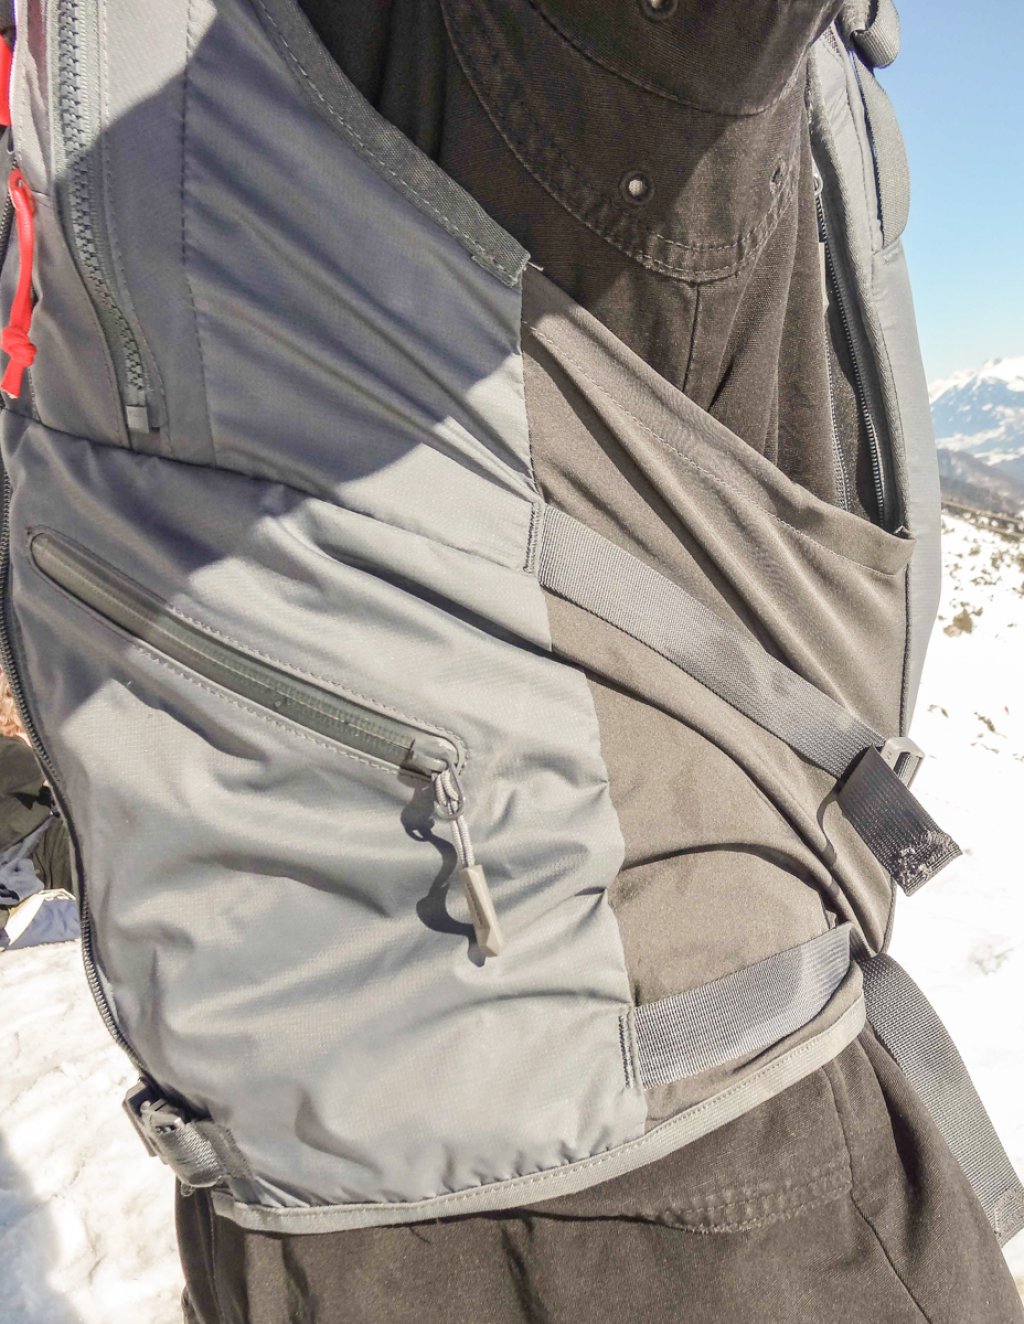 Mammut Alyeska Protection Airbag Vest - diagonal adjustment option